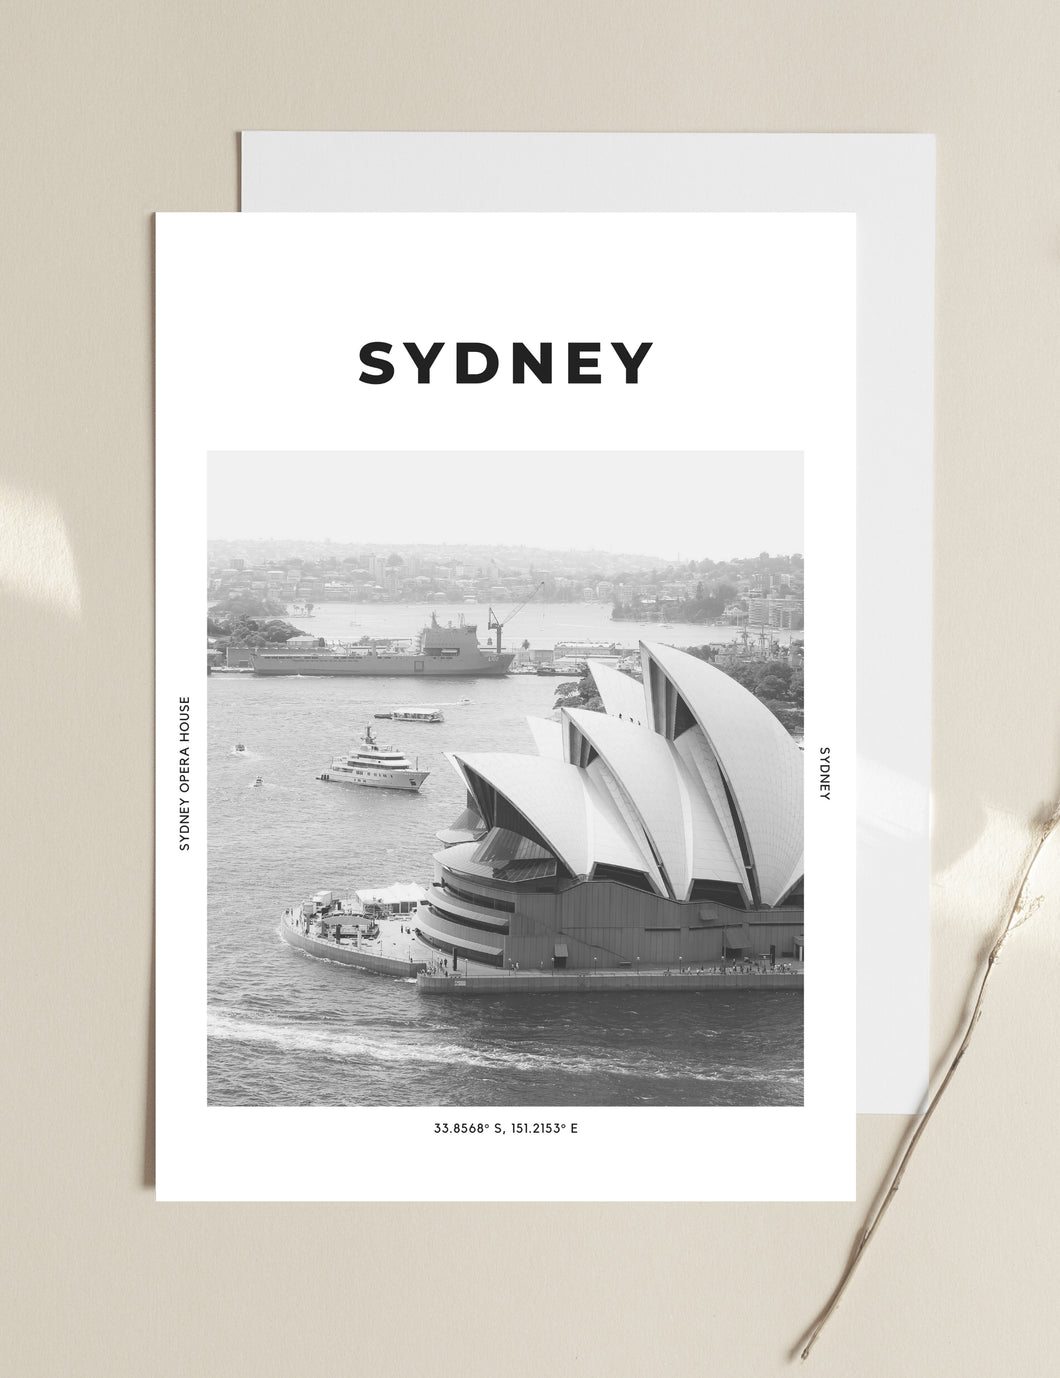 Sydney 'Grand Opera' Print